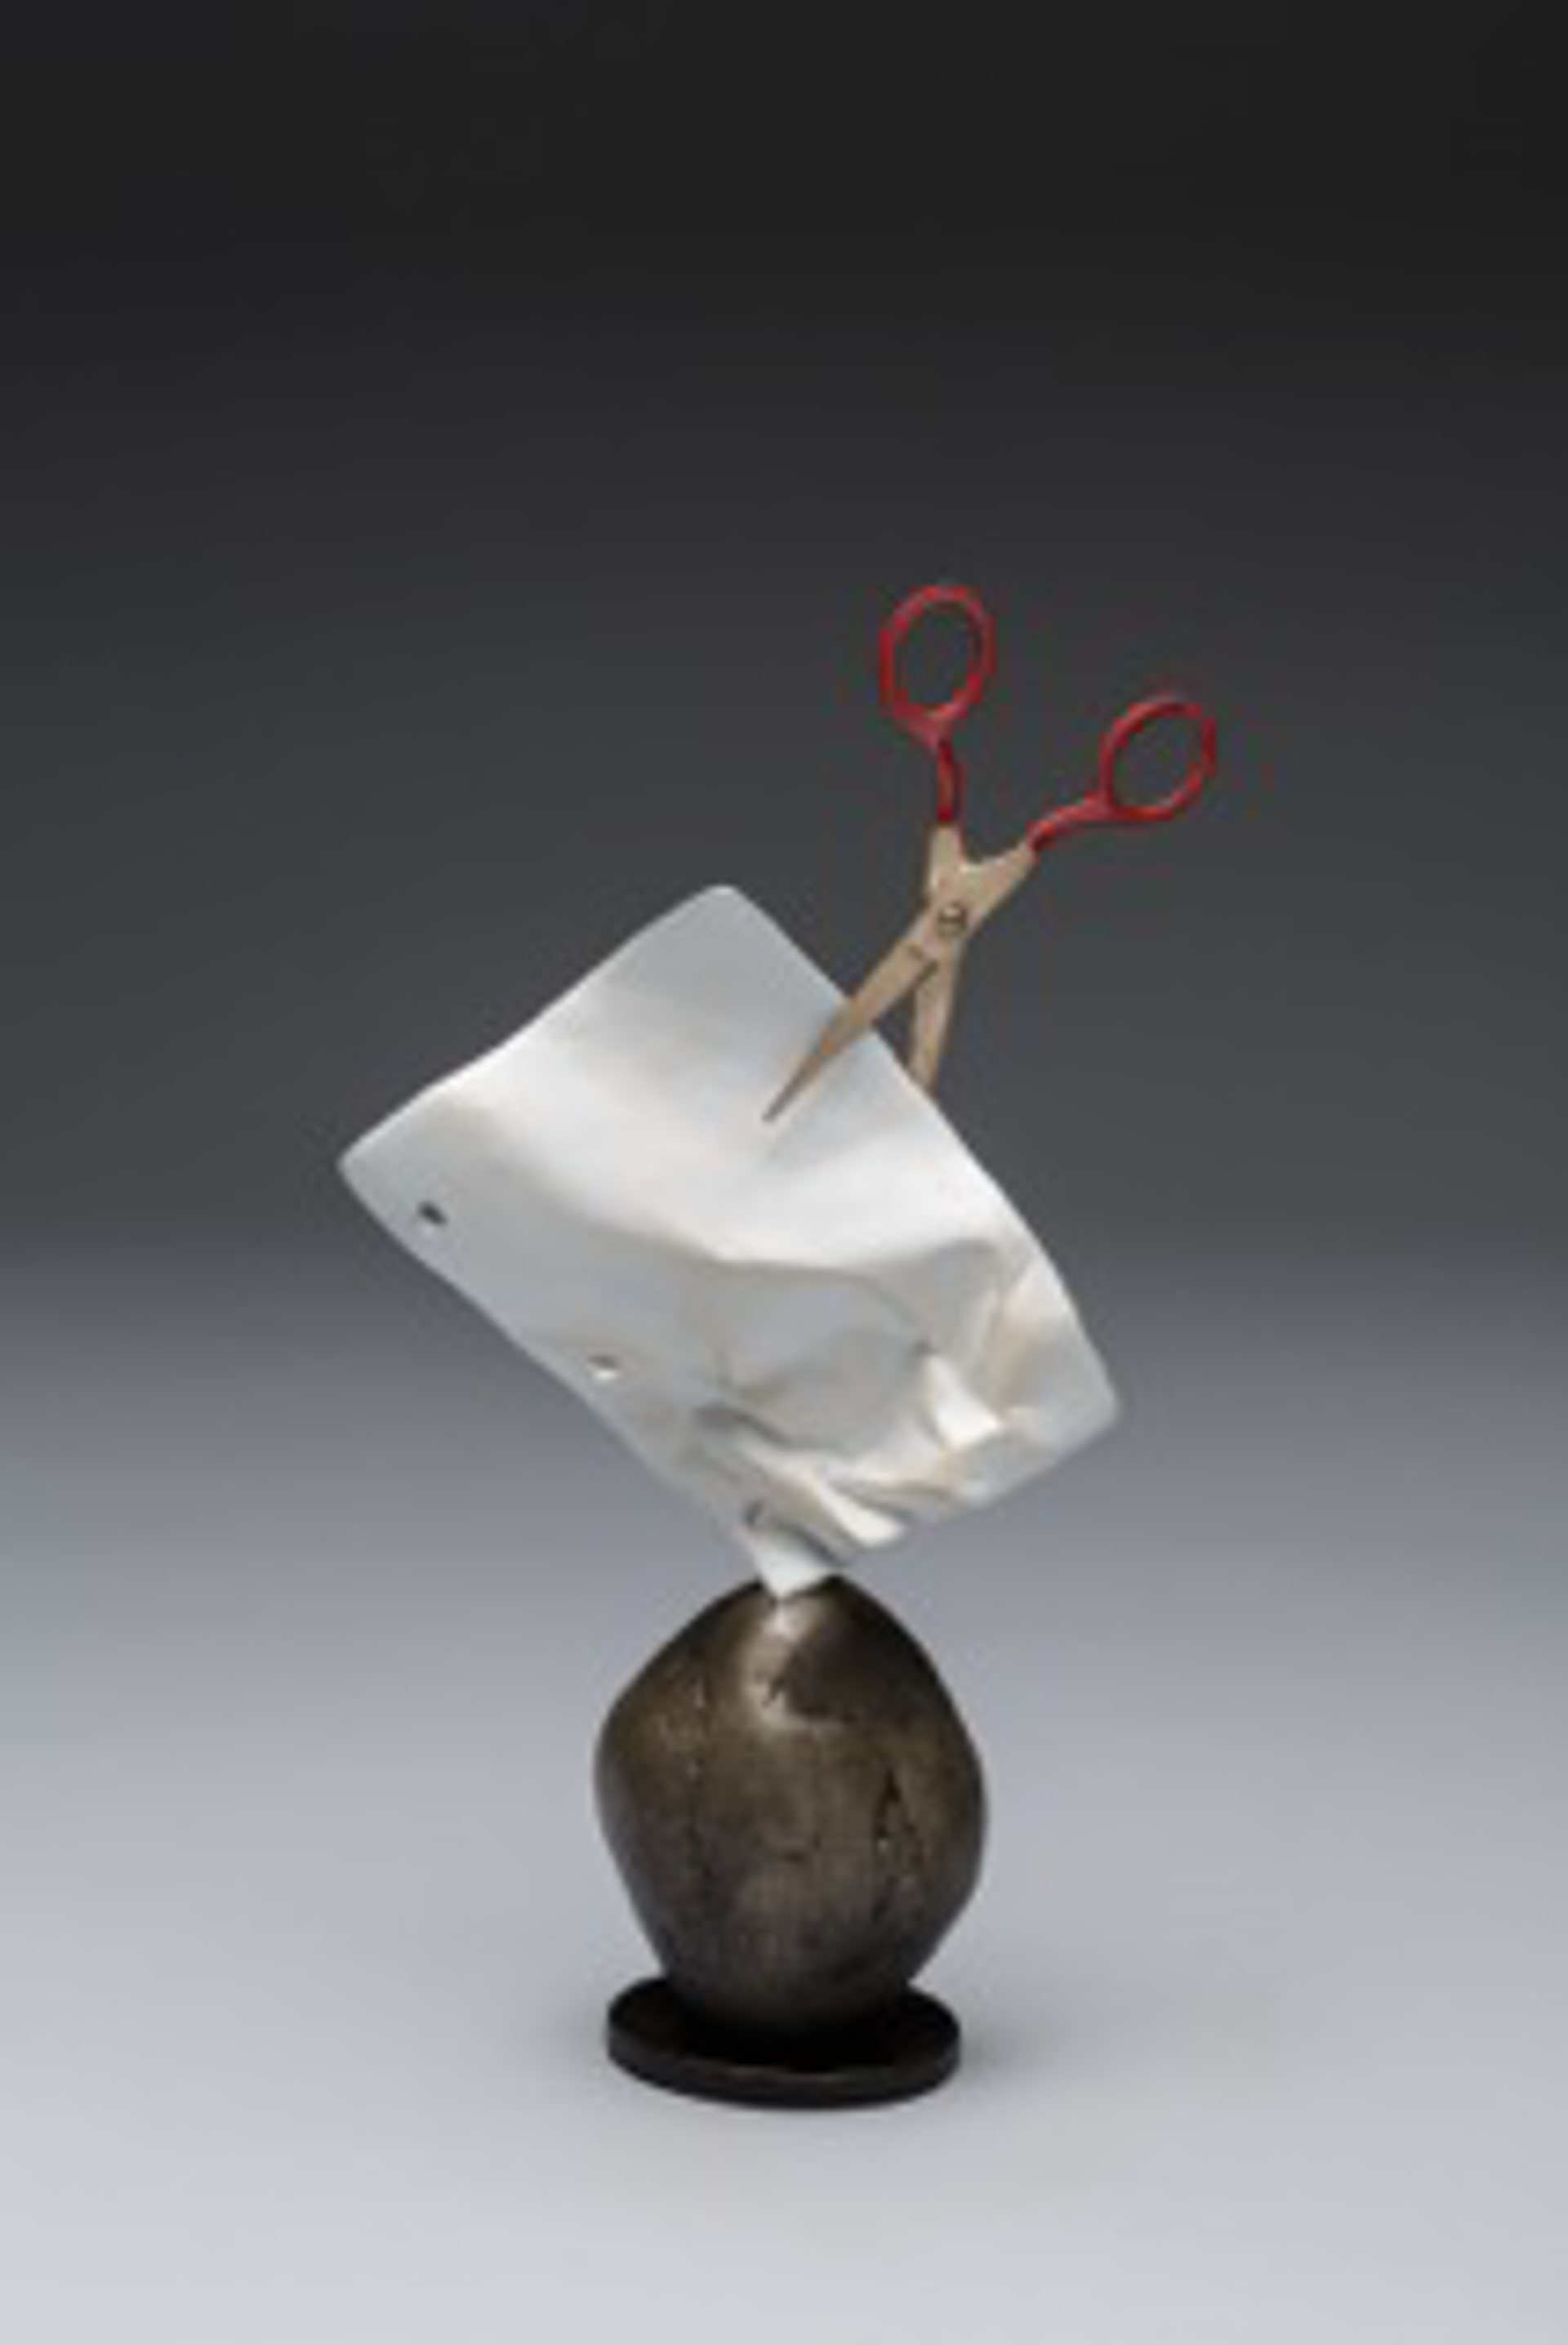 Rock, Paper, Scissors (Maquette) by Kevin Box